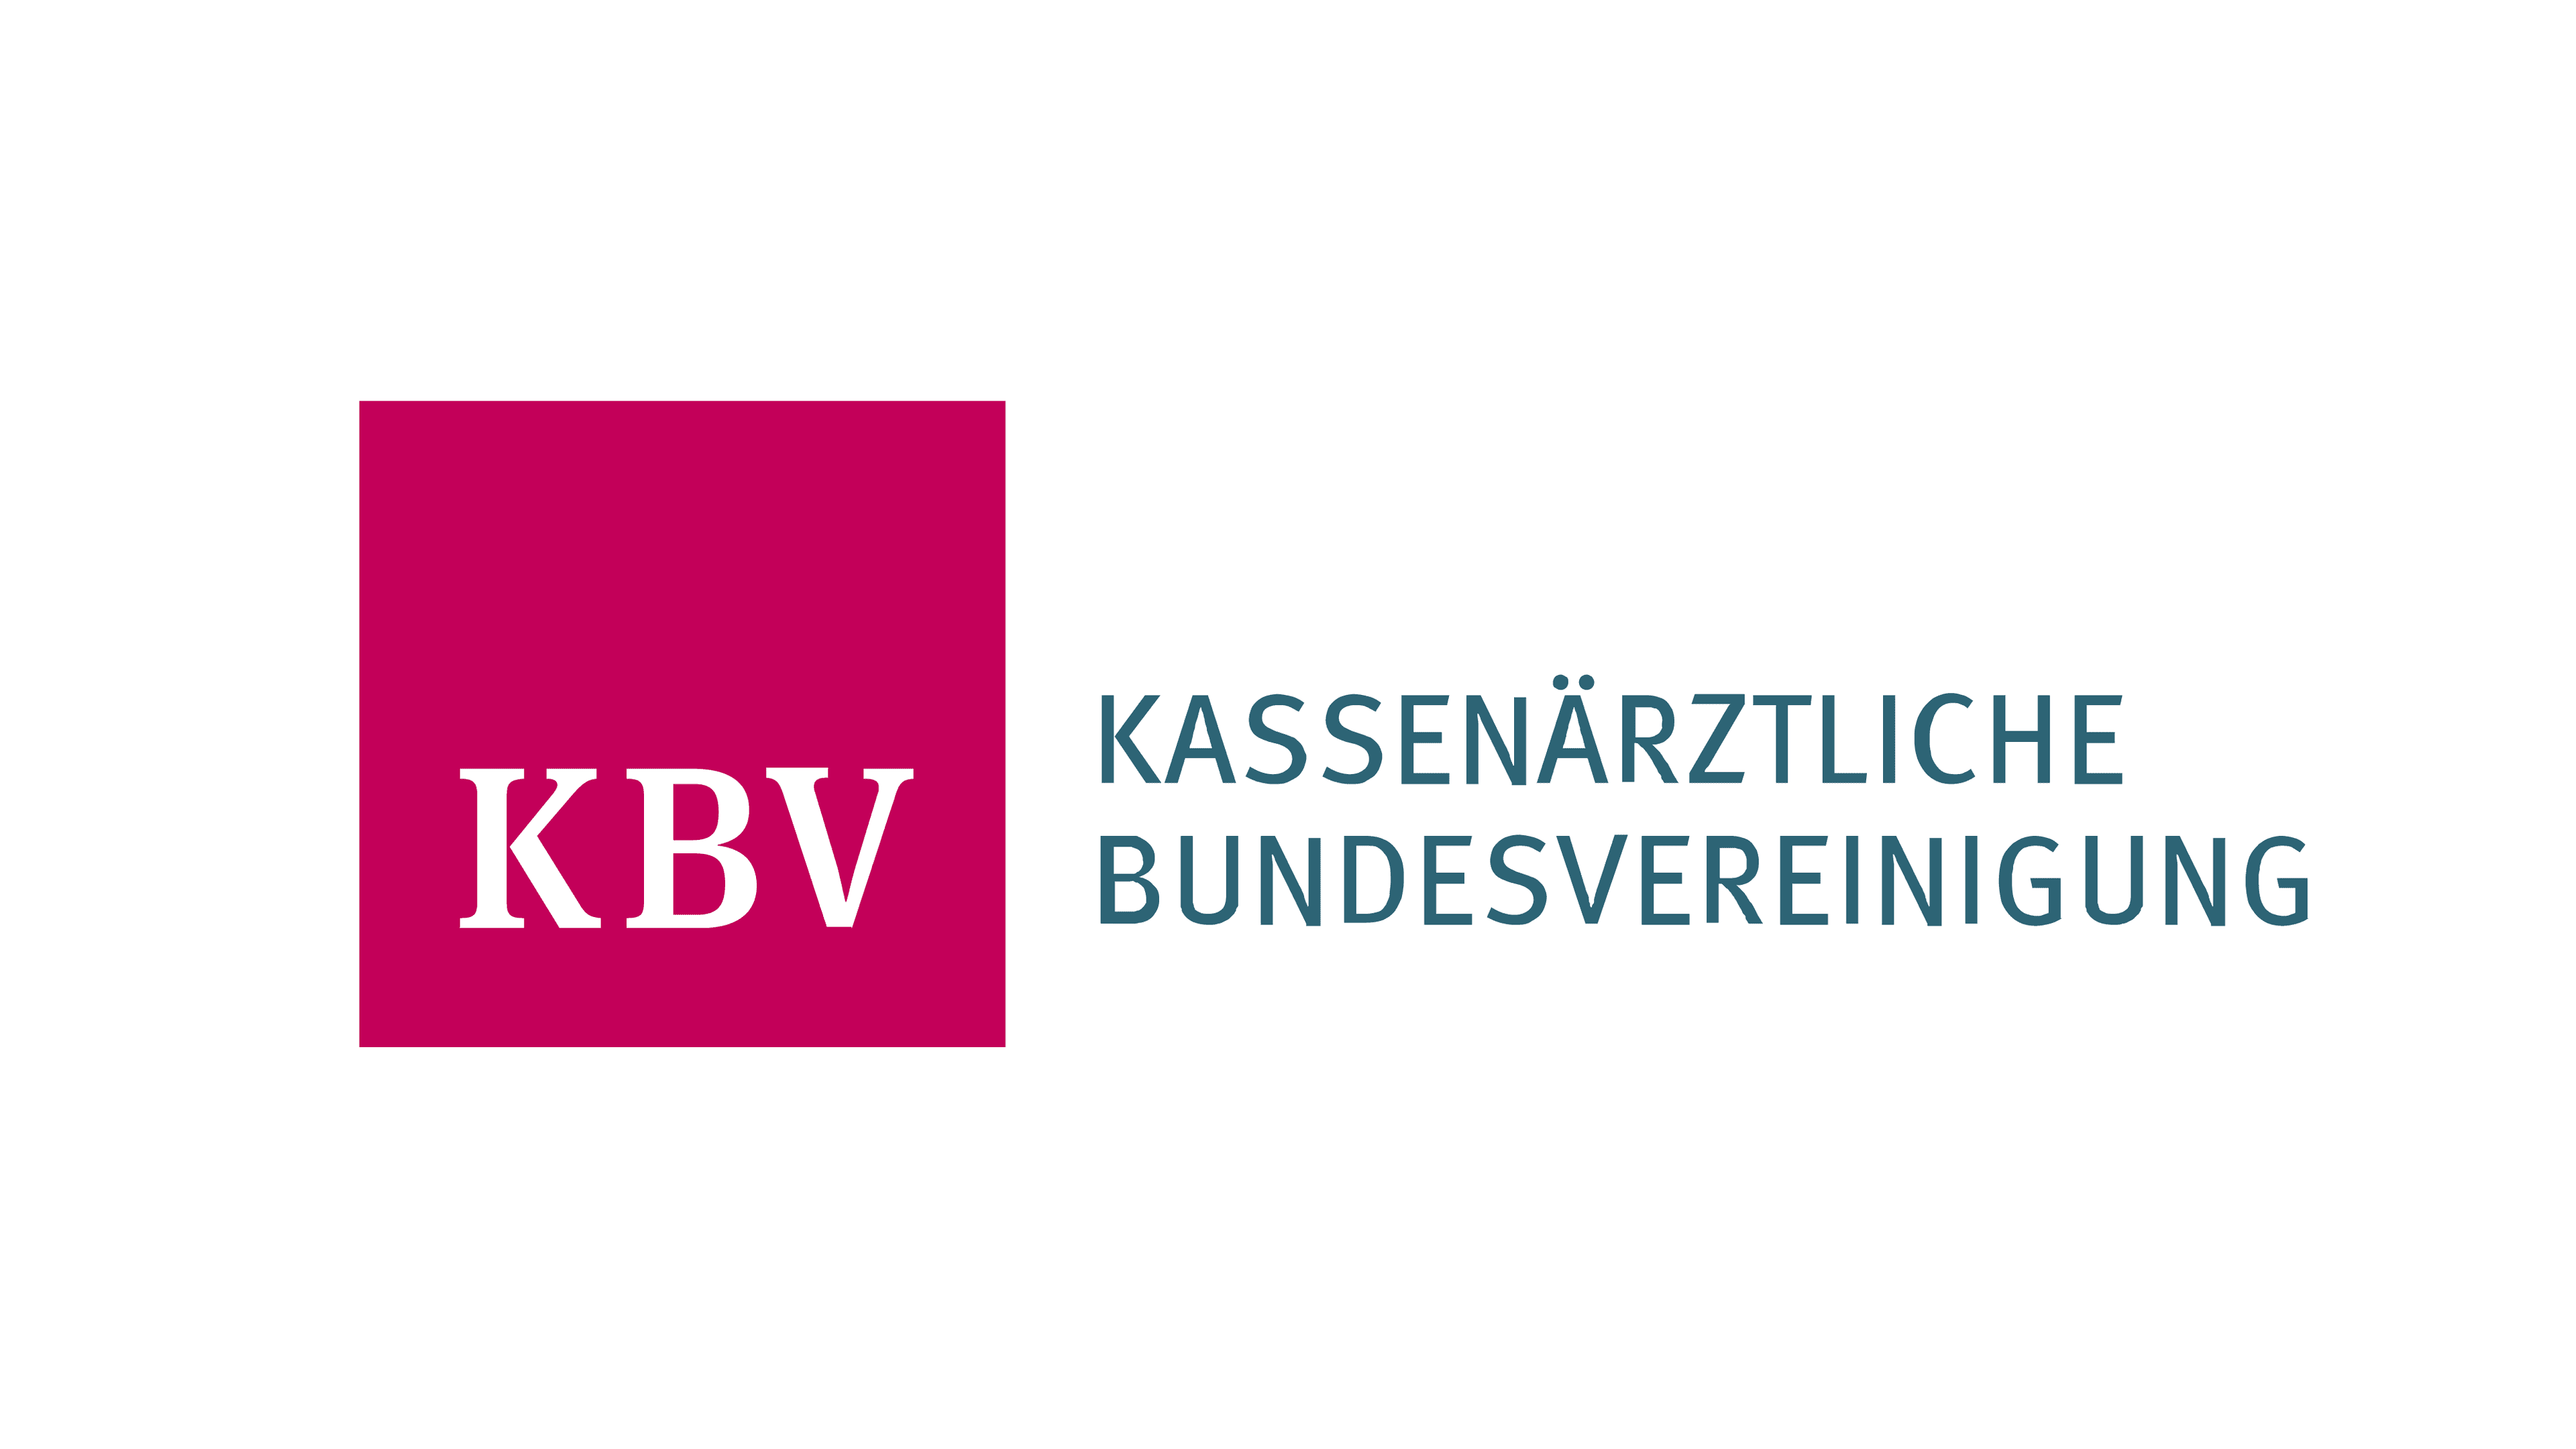 KBV logo